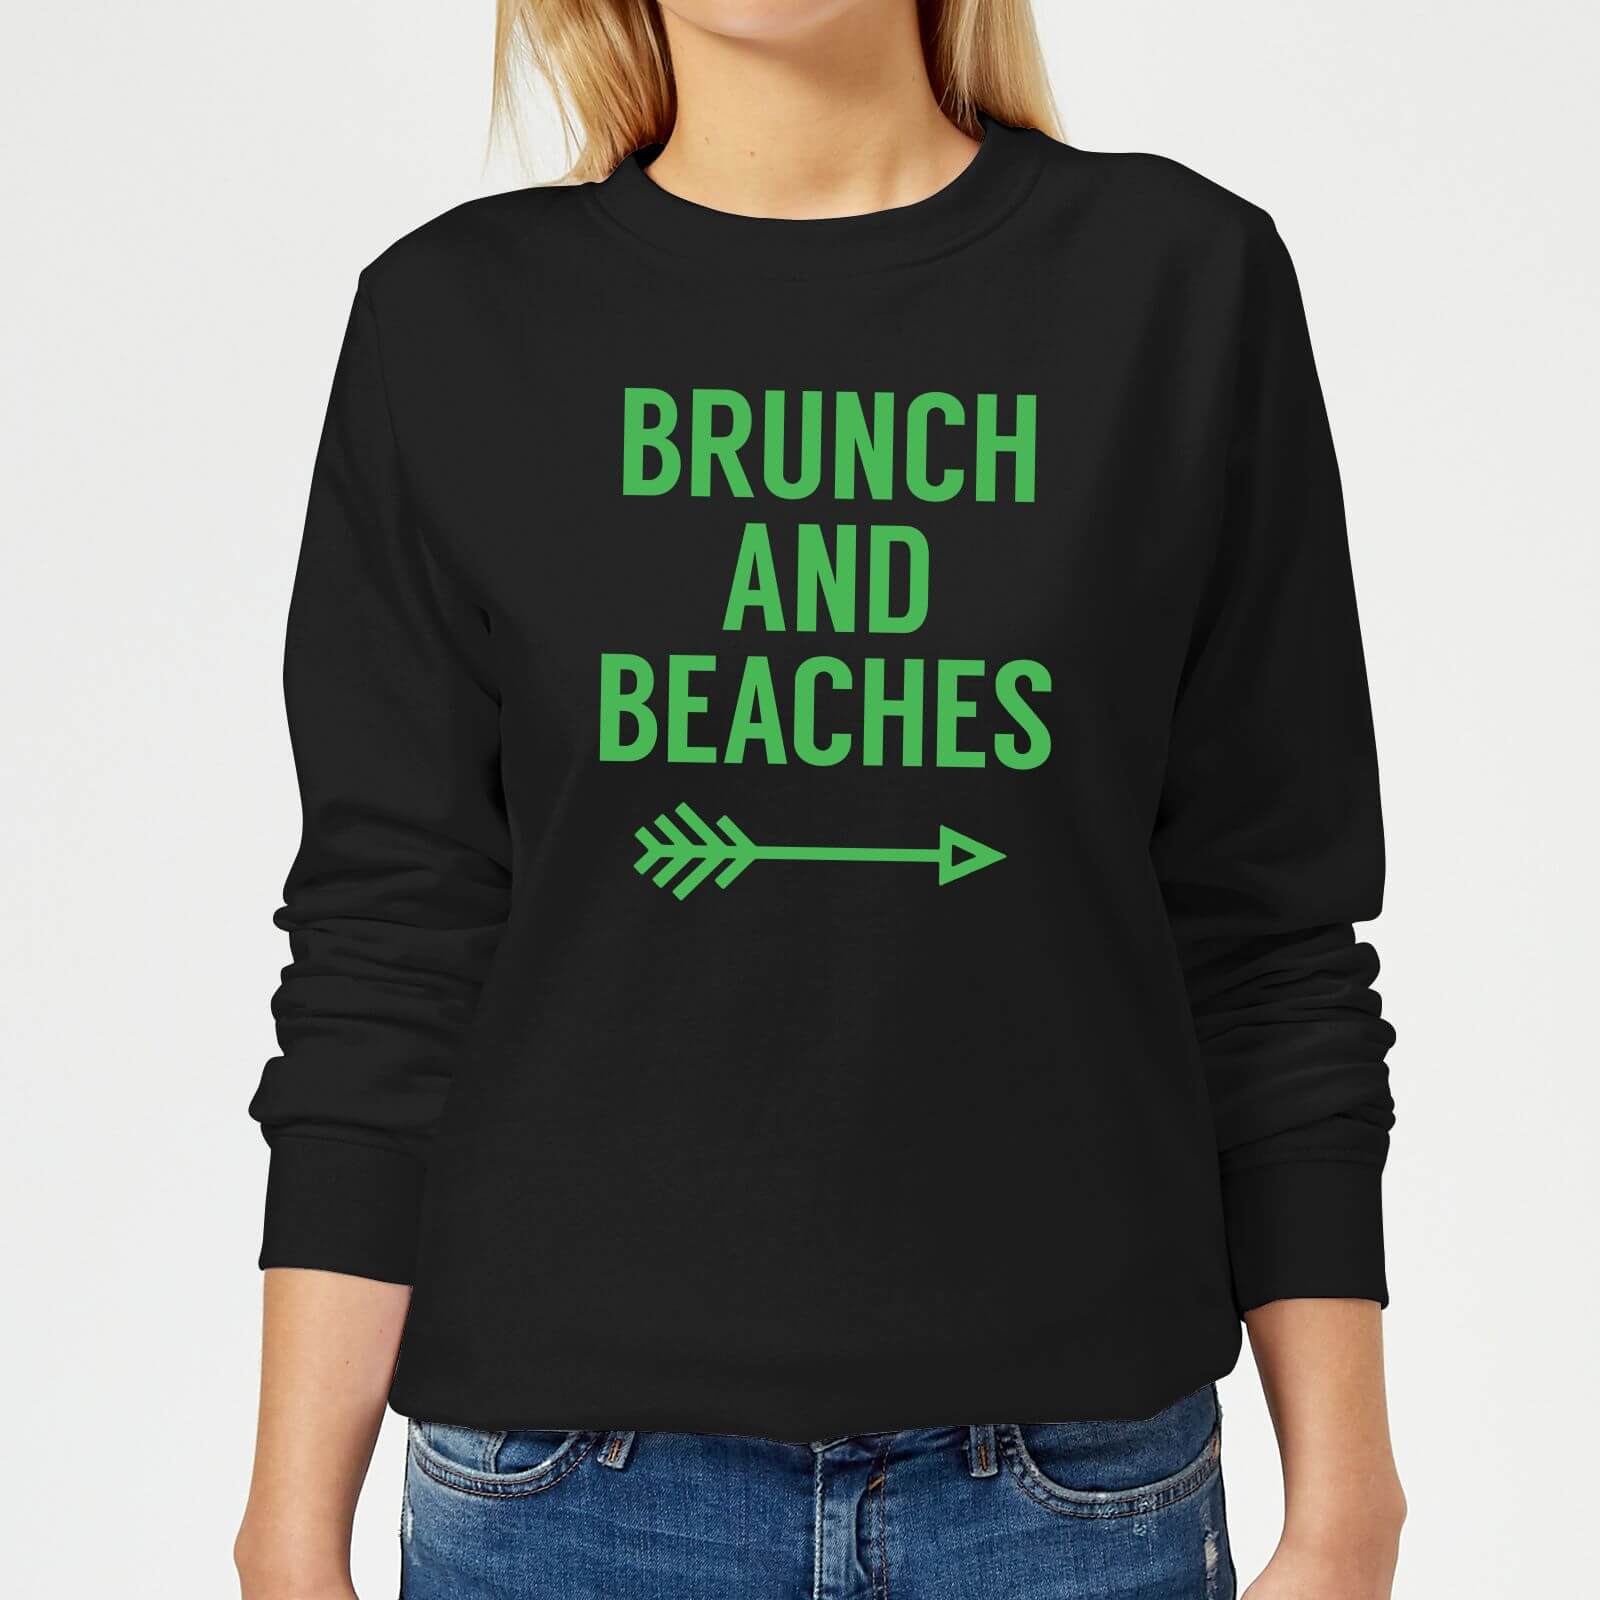 Brunch and Beaches Women's Sweatshirt - Black - 5XL - Black